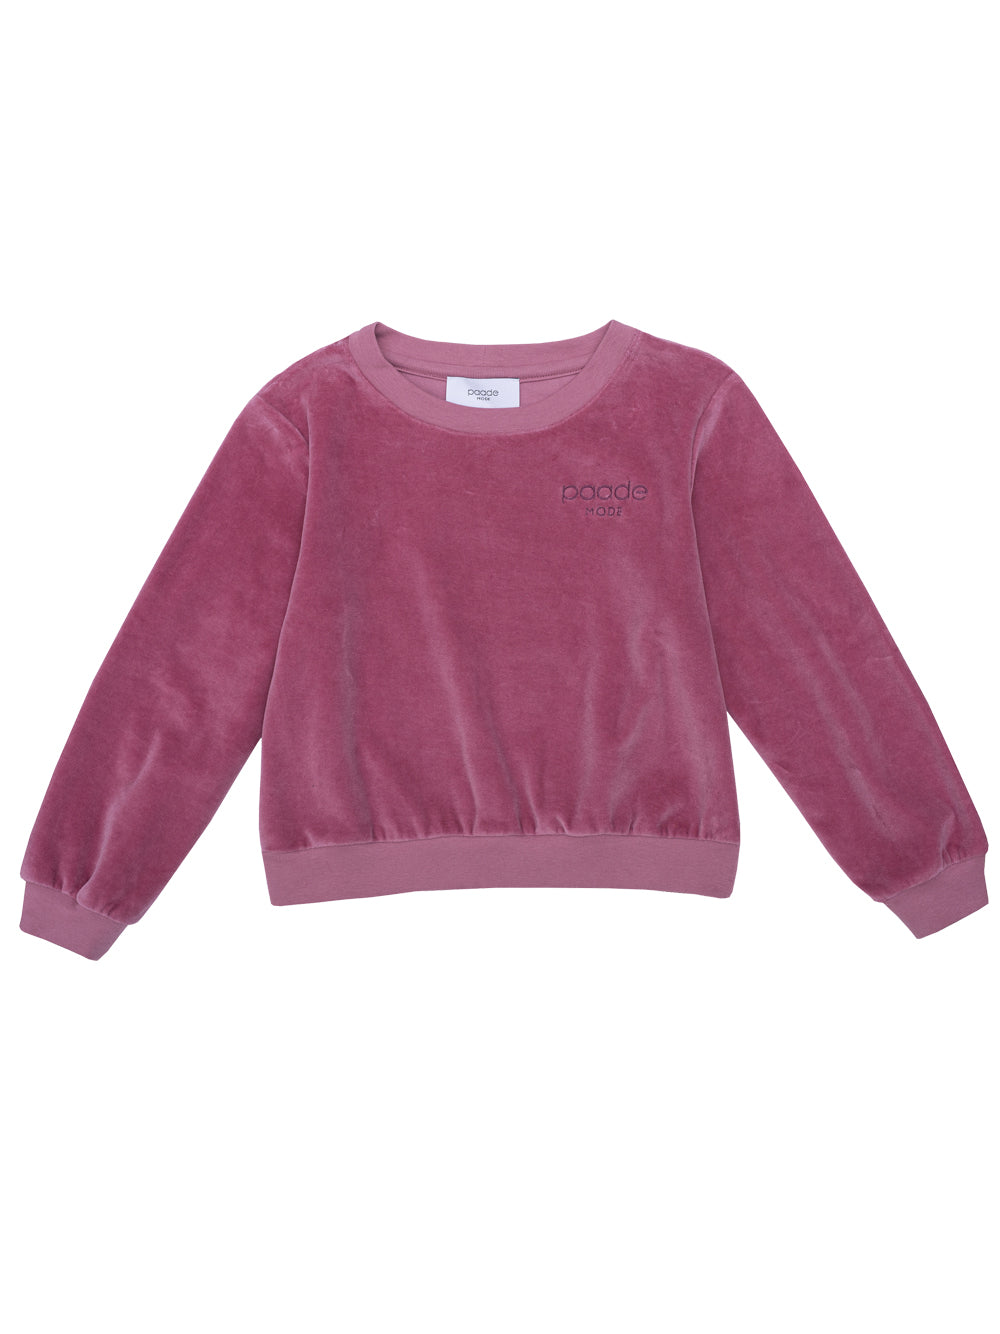 Copenhagen Pink Logo Sweater